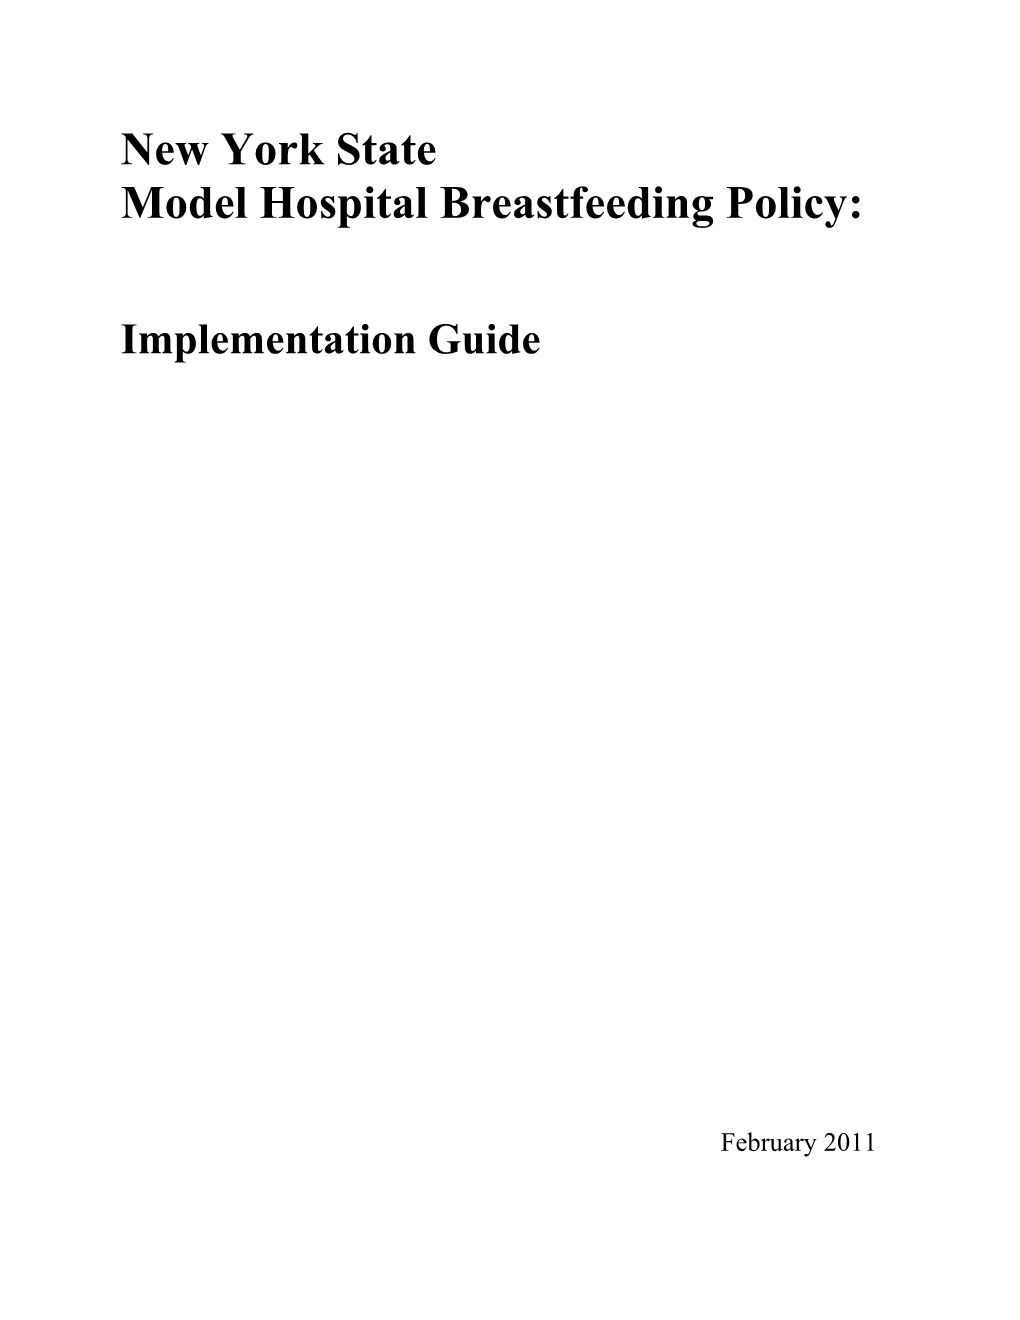 New York State Model Hospital Breastfeeding Policy